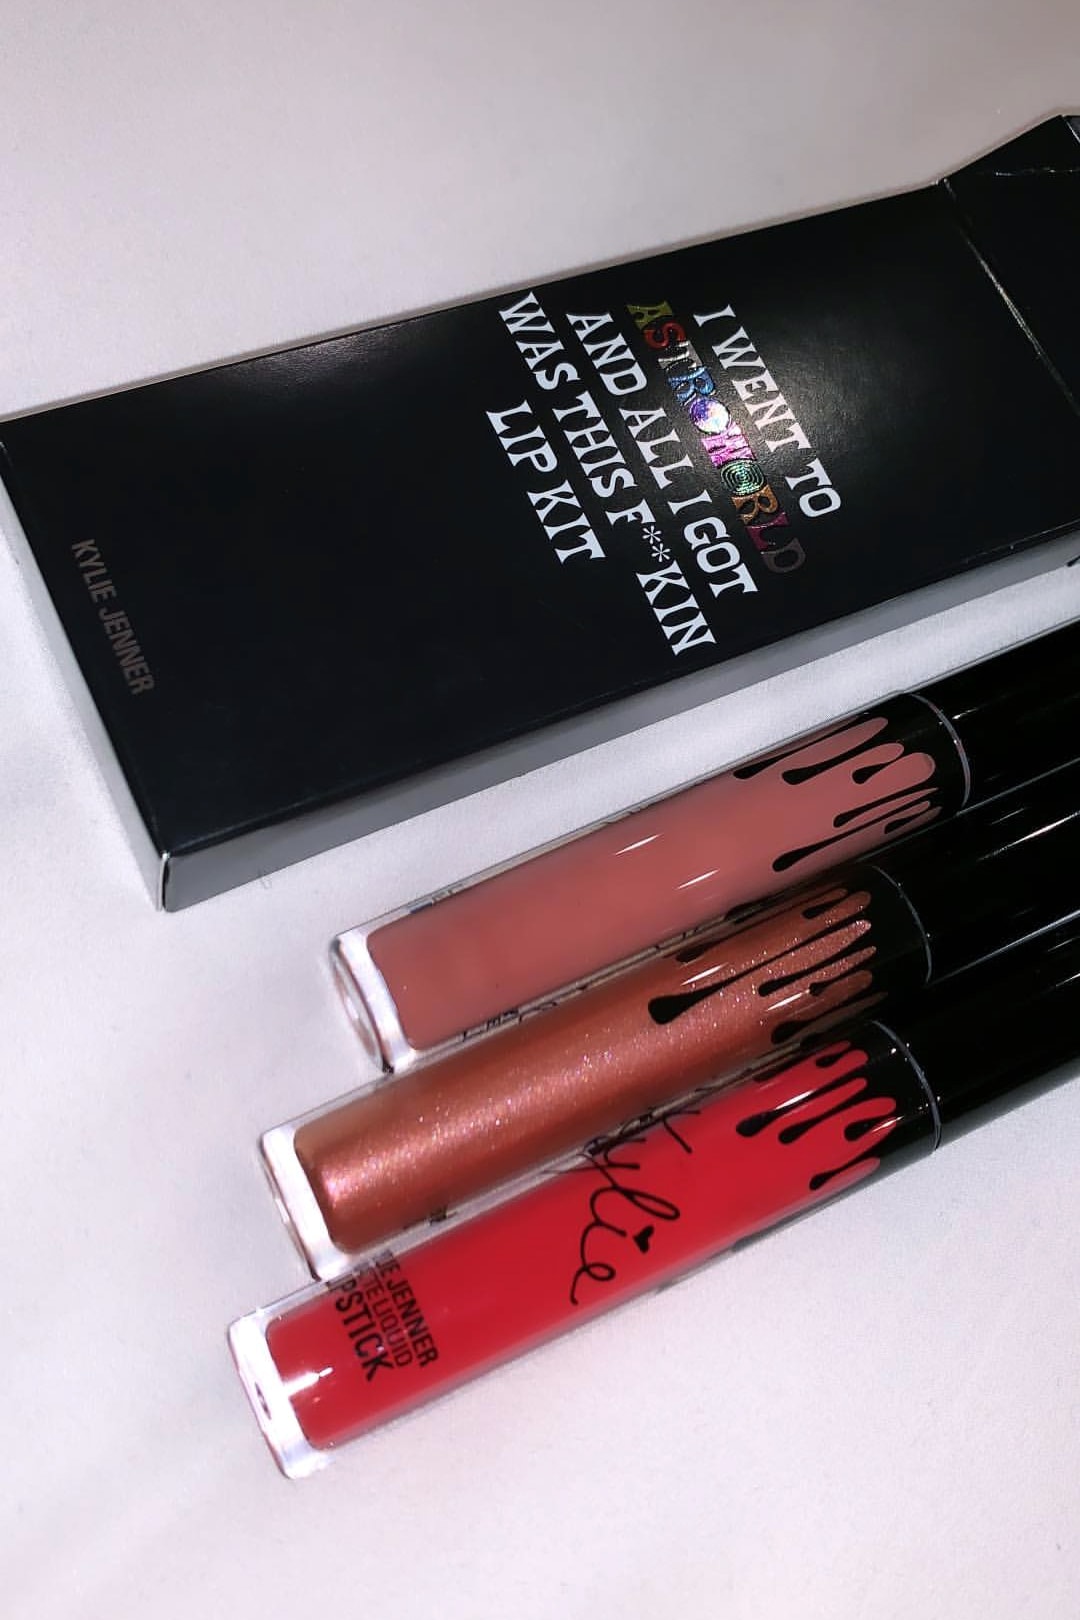 Kylie Cosmetics Drops New Travis Scott "Astroworld" Lip Kit Merch Exclusive Makeup Beauty Merchandise Tour 